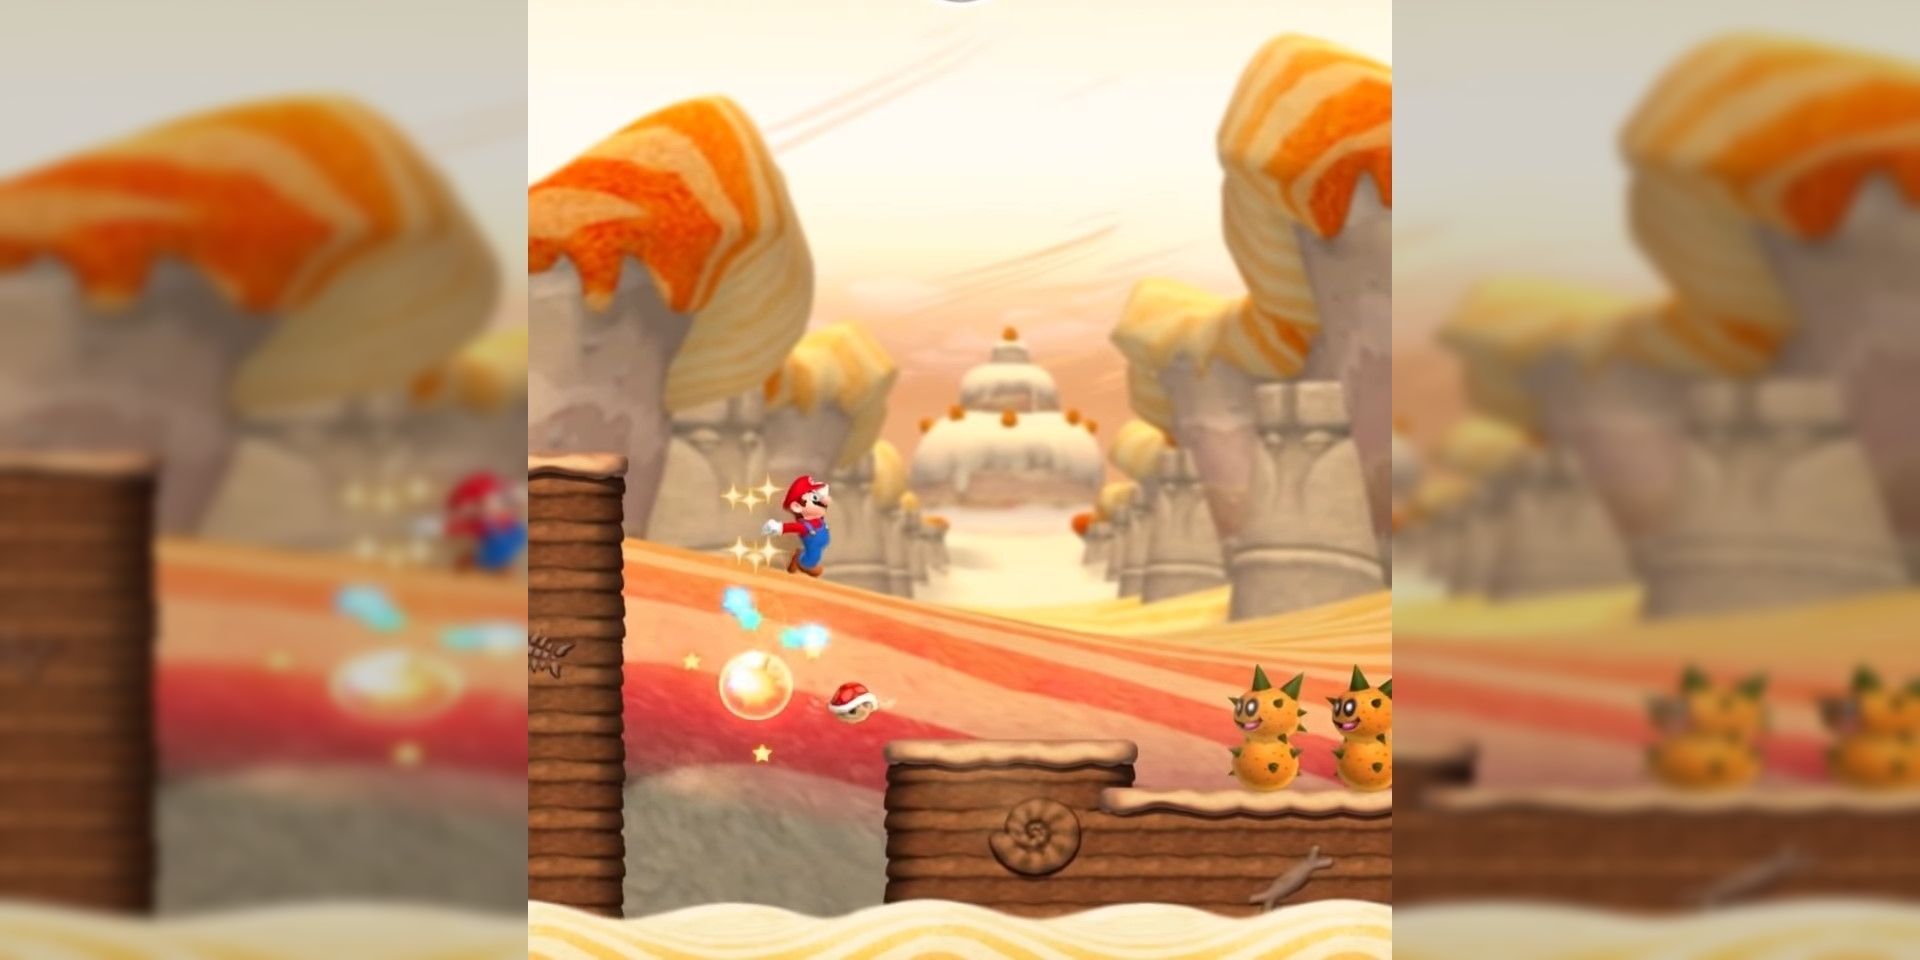 A screenshot from the Mario Run video game